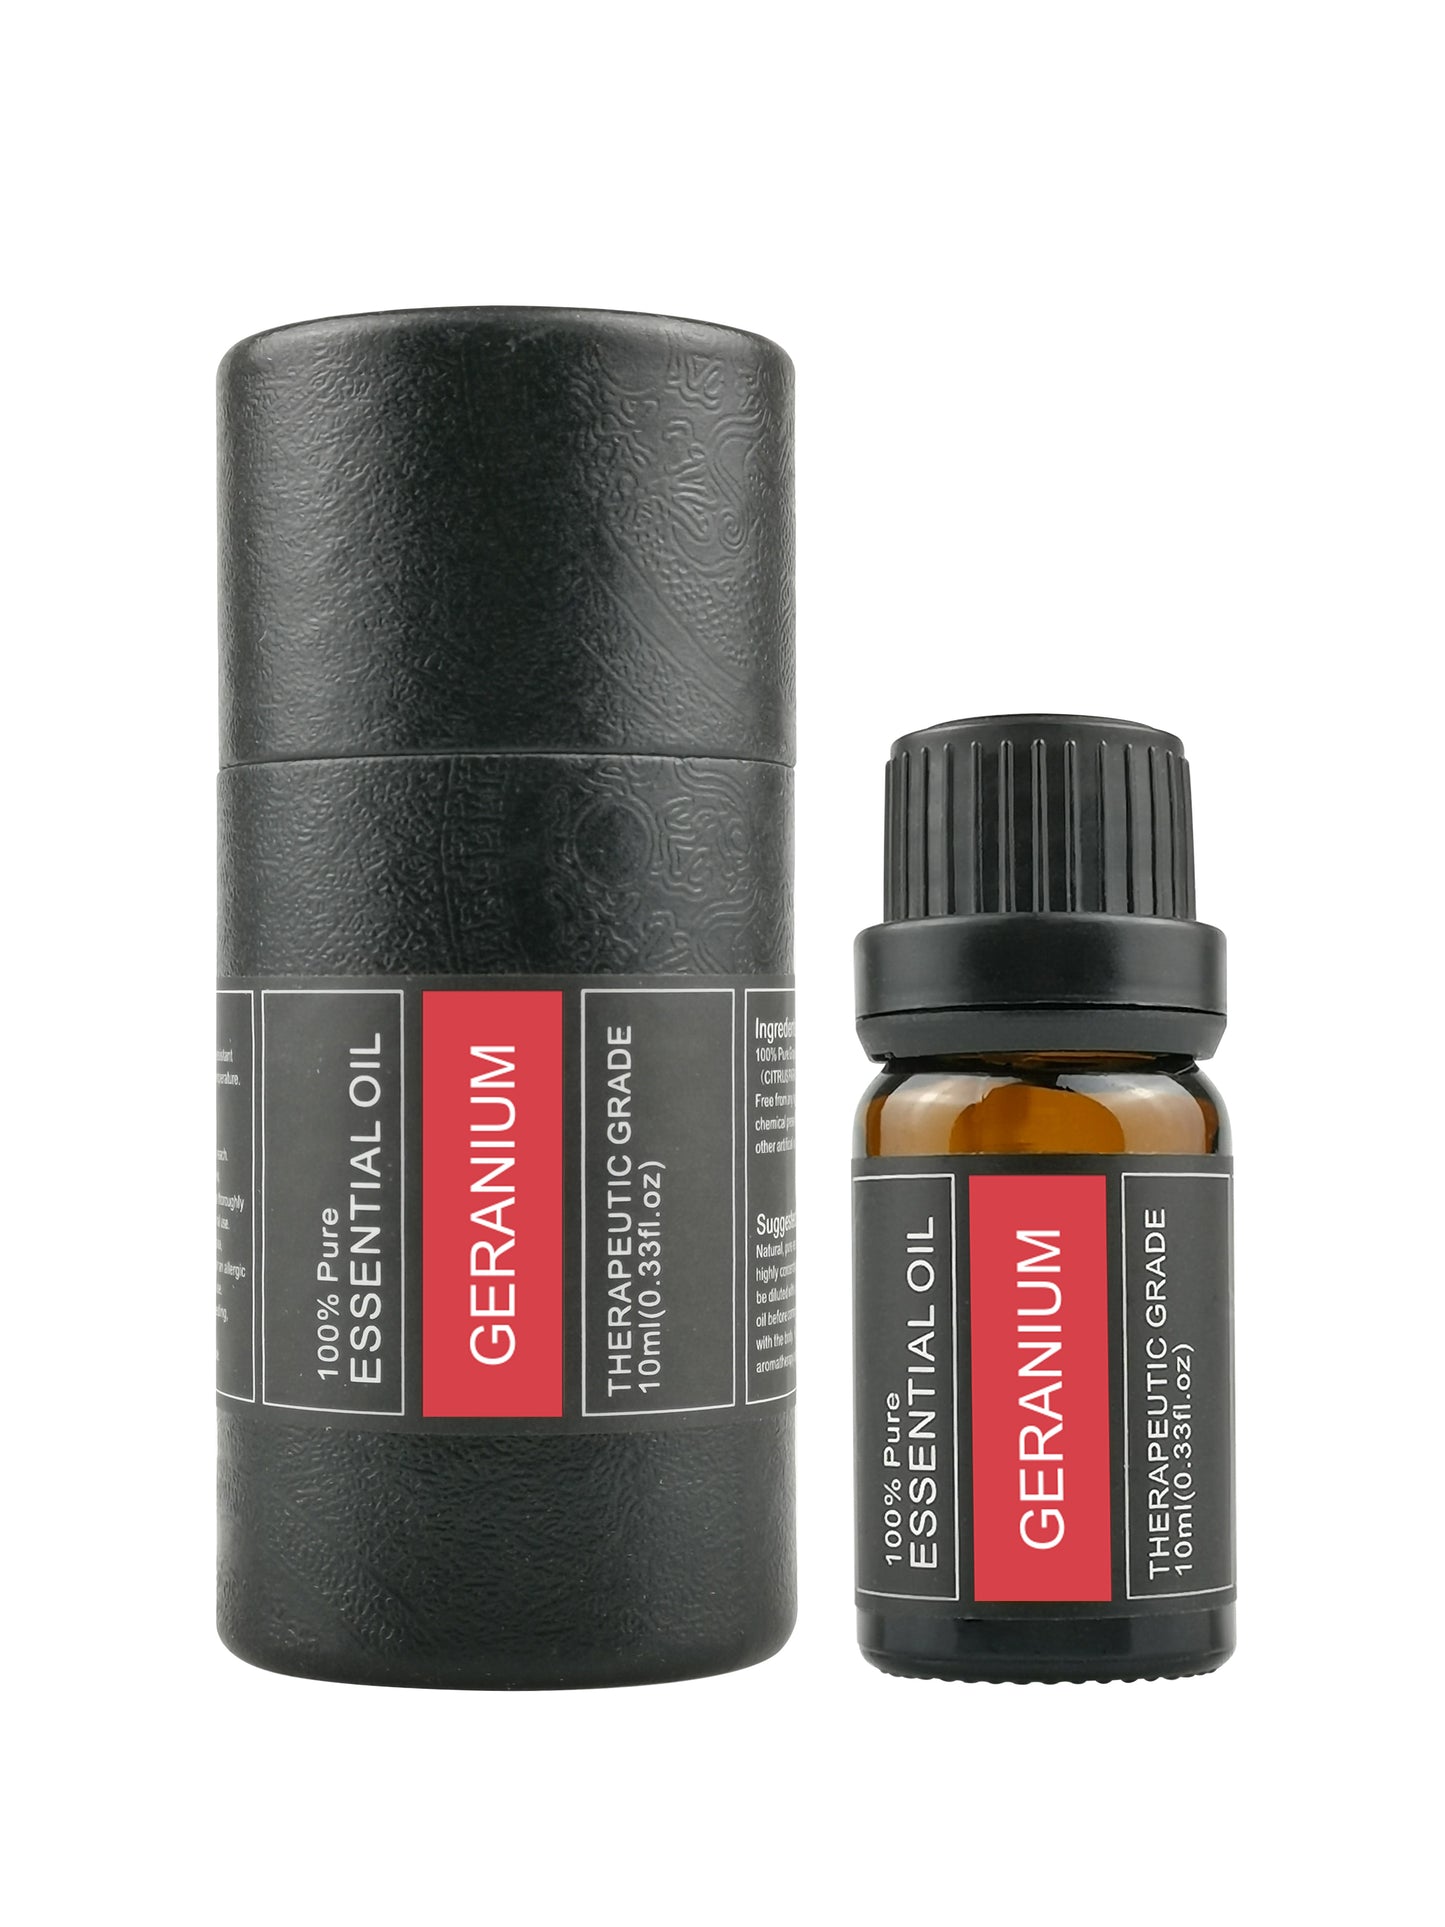 OEM & ODM Wholesale Organic Geranium Aromatherapy Essential Oil, Natural Single Essential Oil 249